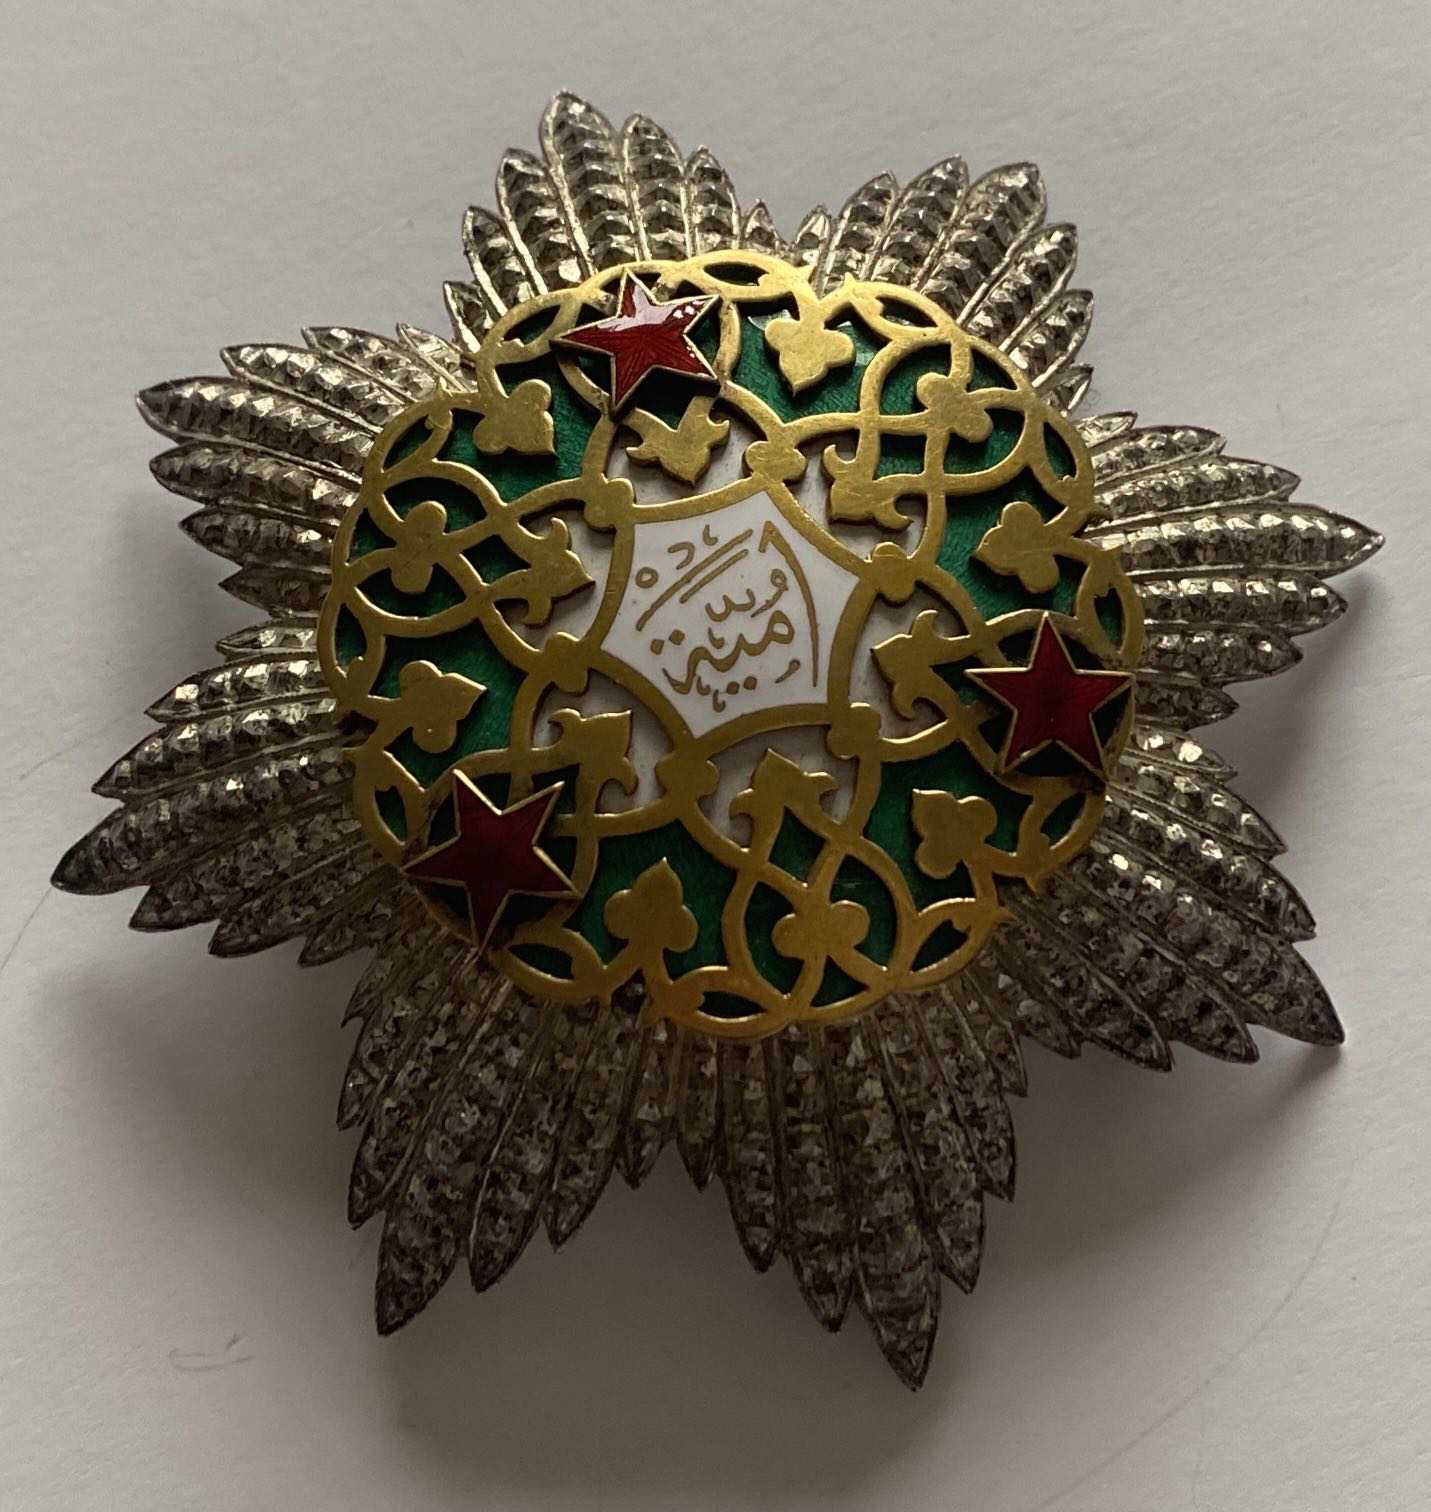 The Orient Treasures - Syria Arab Republic National Order of 